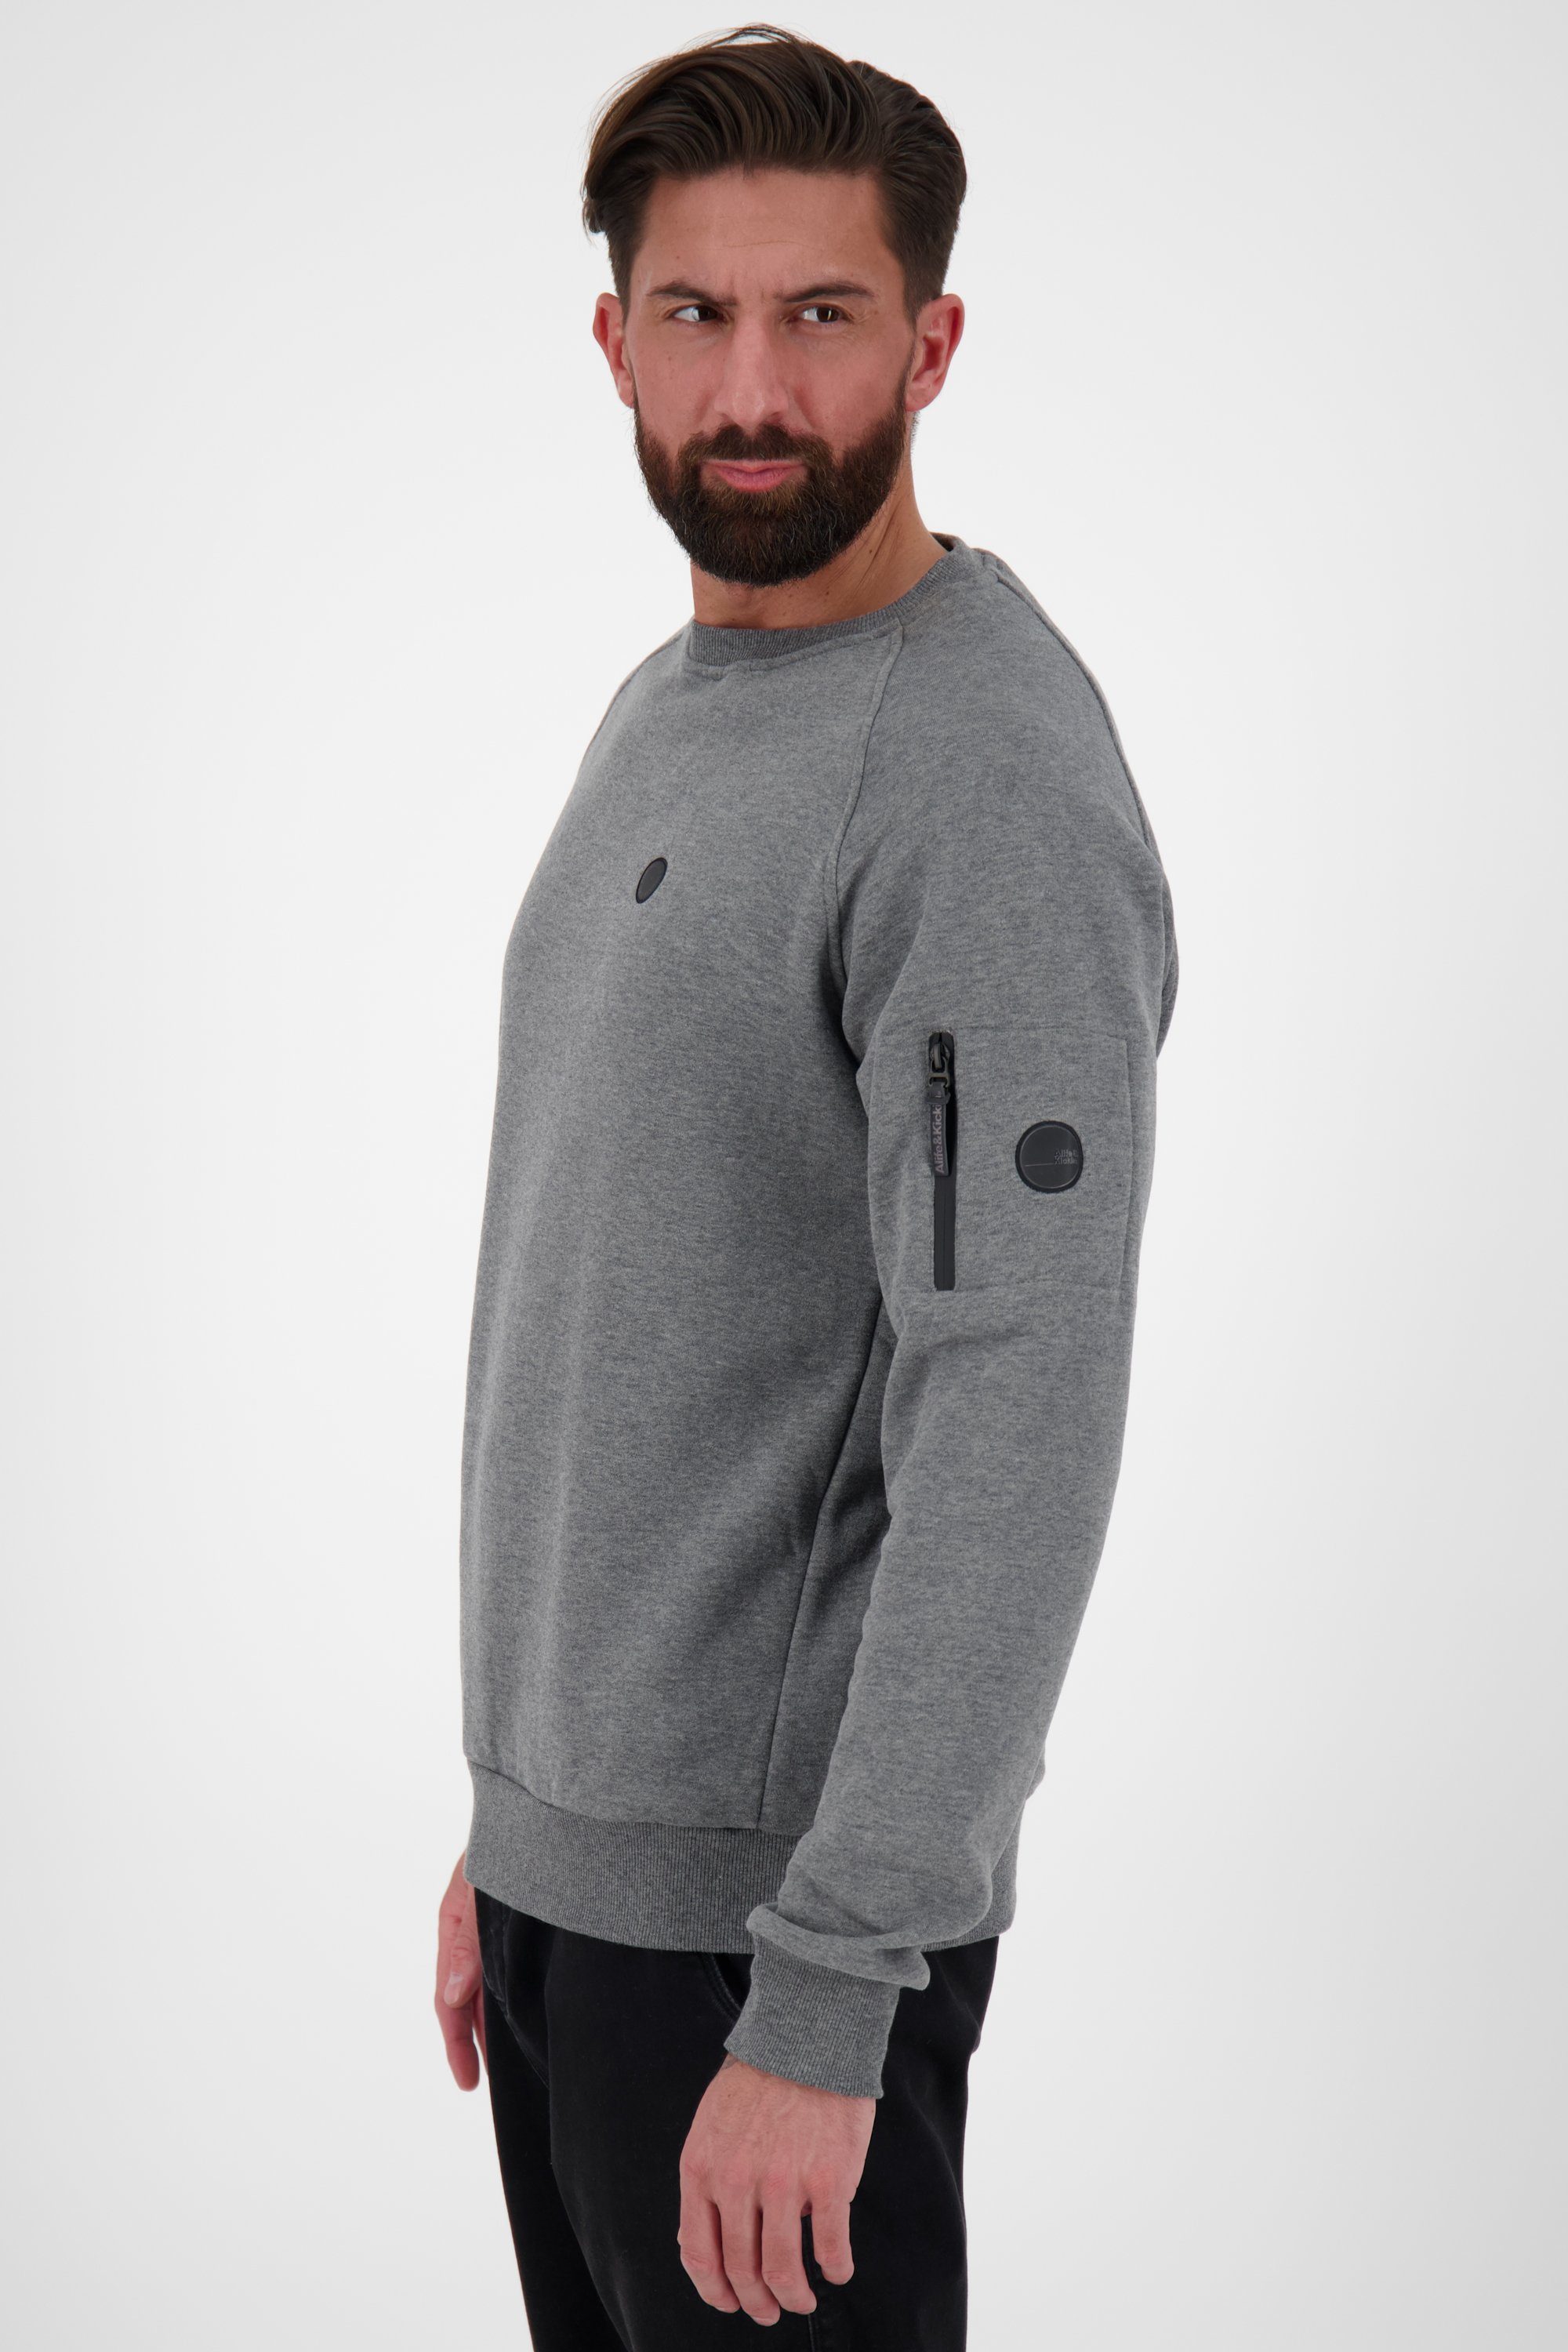 VinnAK Sweatshirt Pullover Kickin Alife steal Crewneck A Sweatshirt, & melange Herren